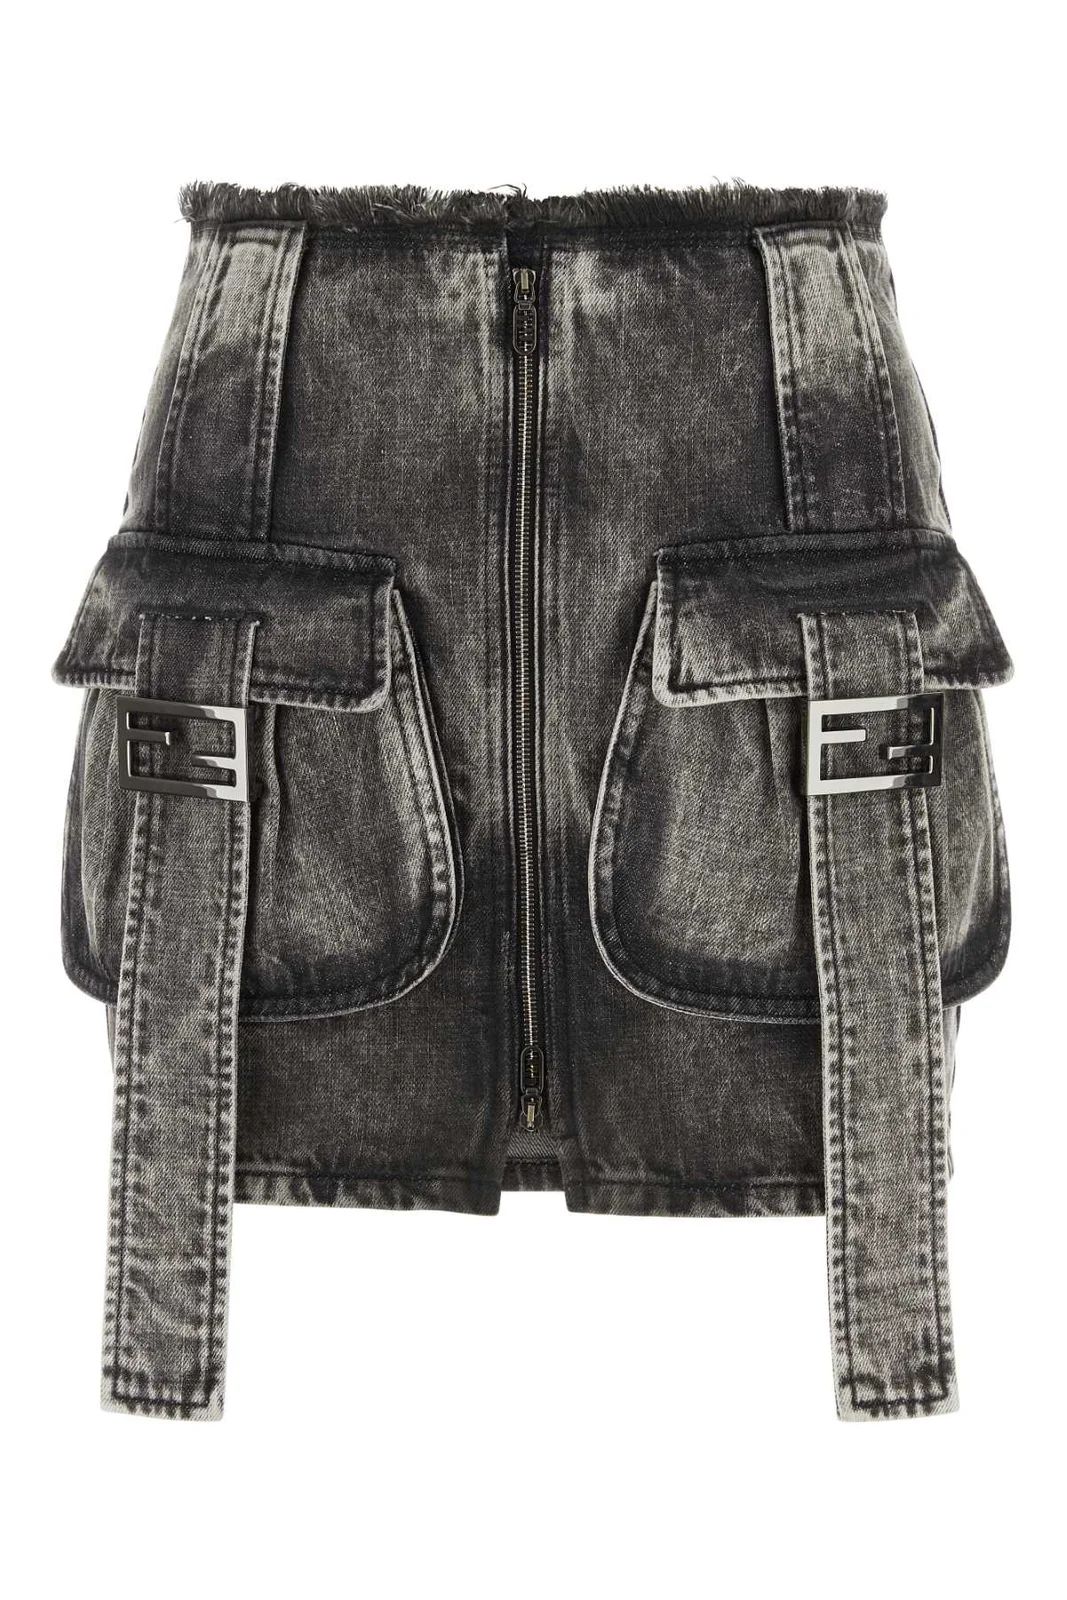 Fendi FF Baguette Buckle Low Waist Mini Skirt | Cettire Global